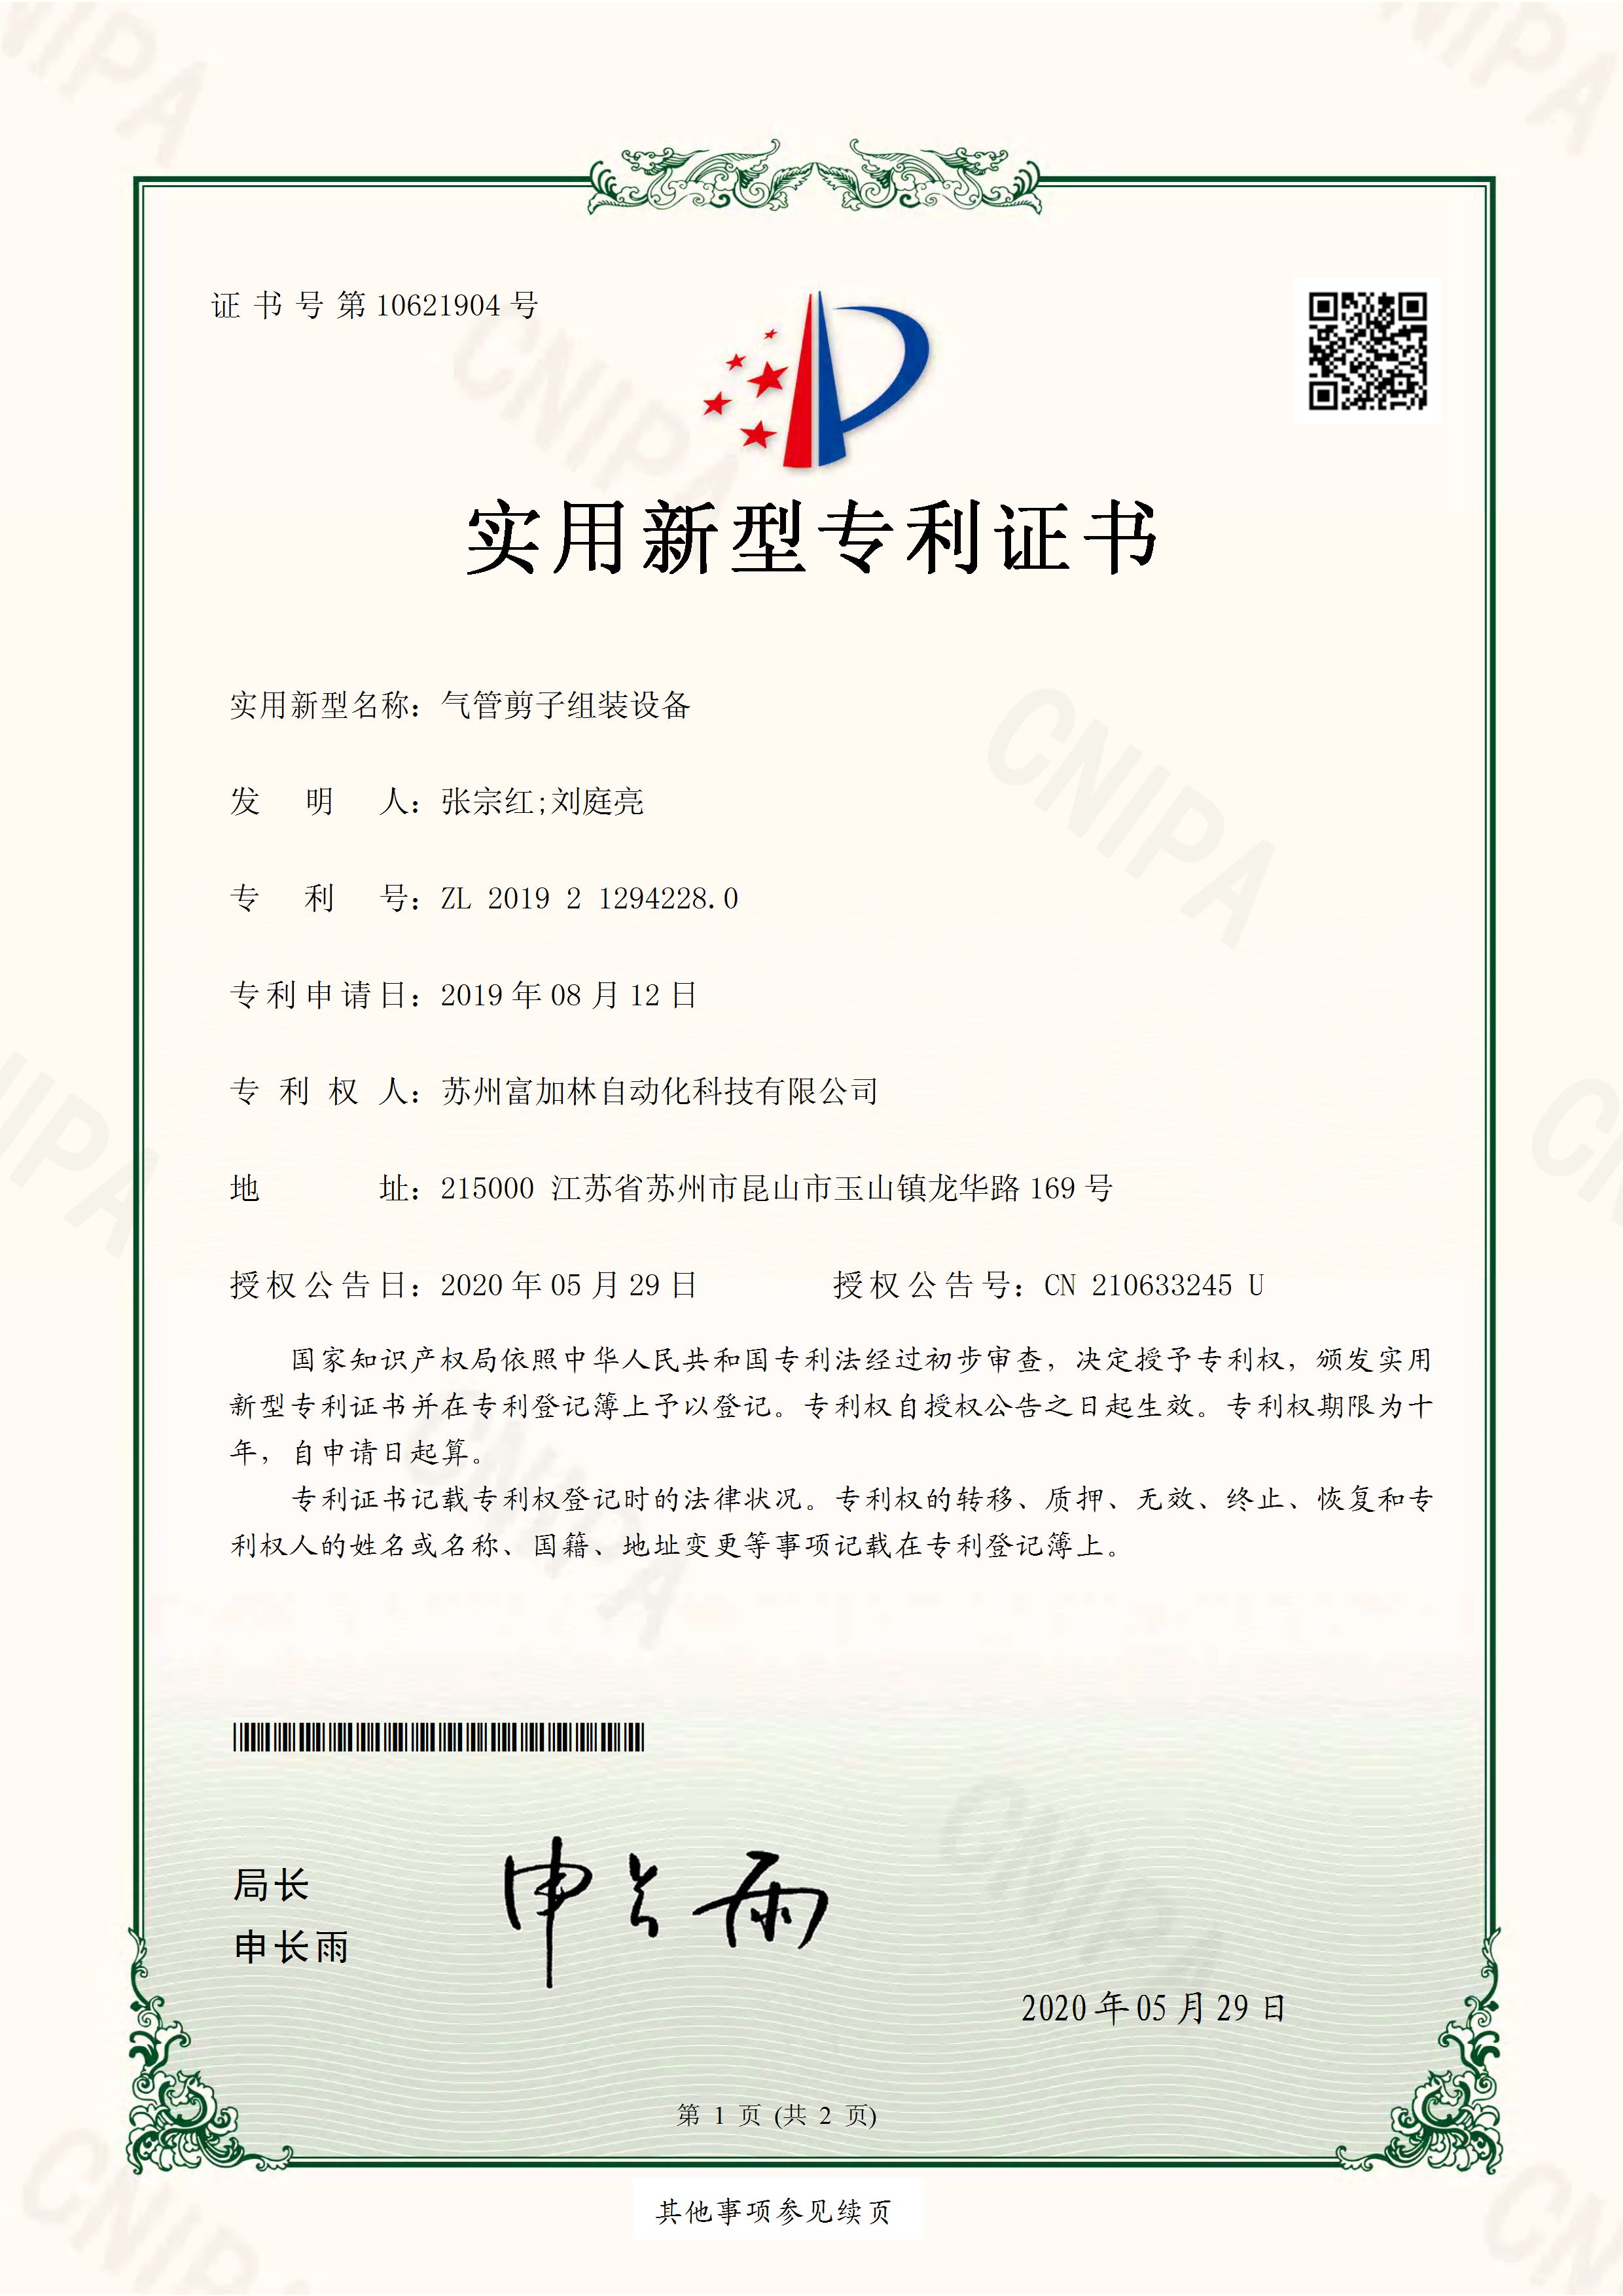 Patent certificate of windpipe scissors assembly equipment